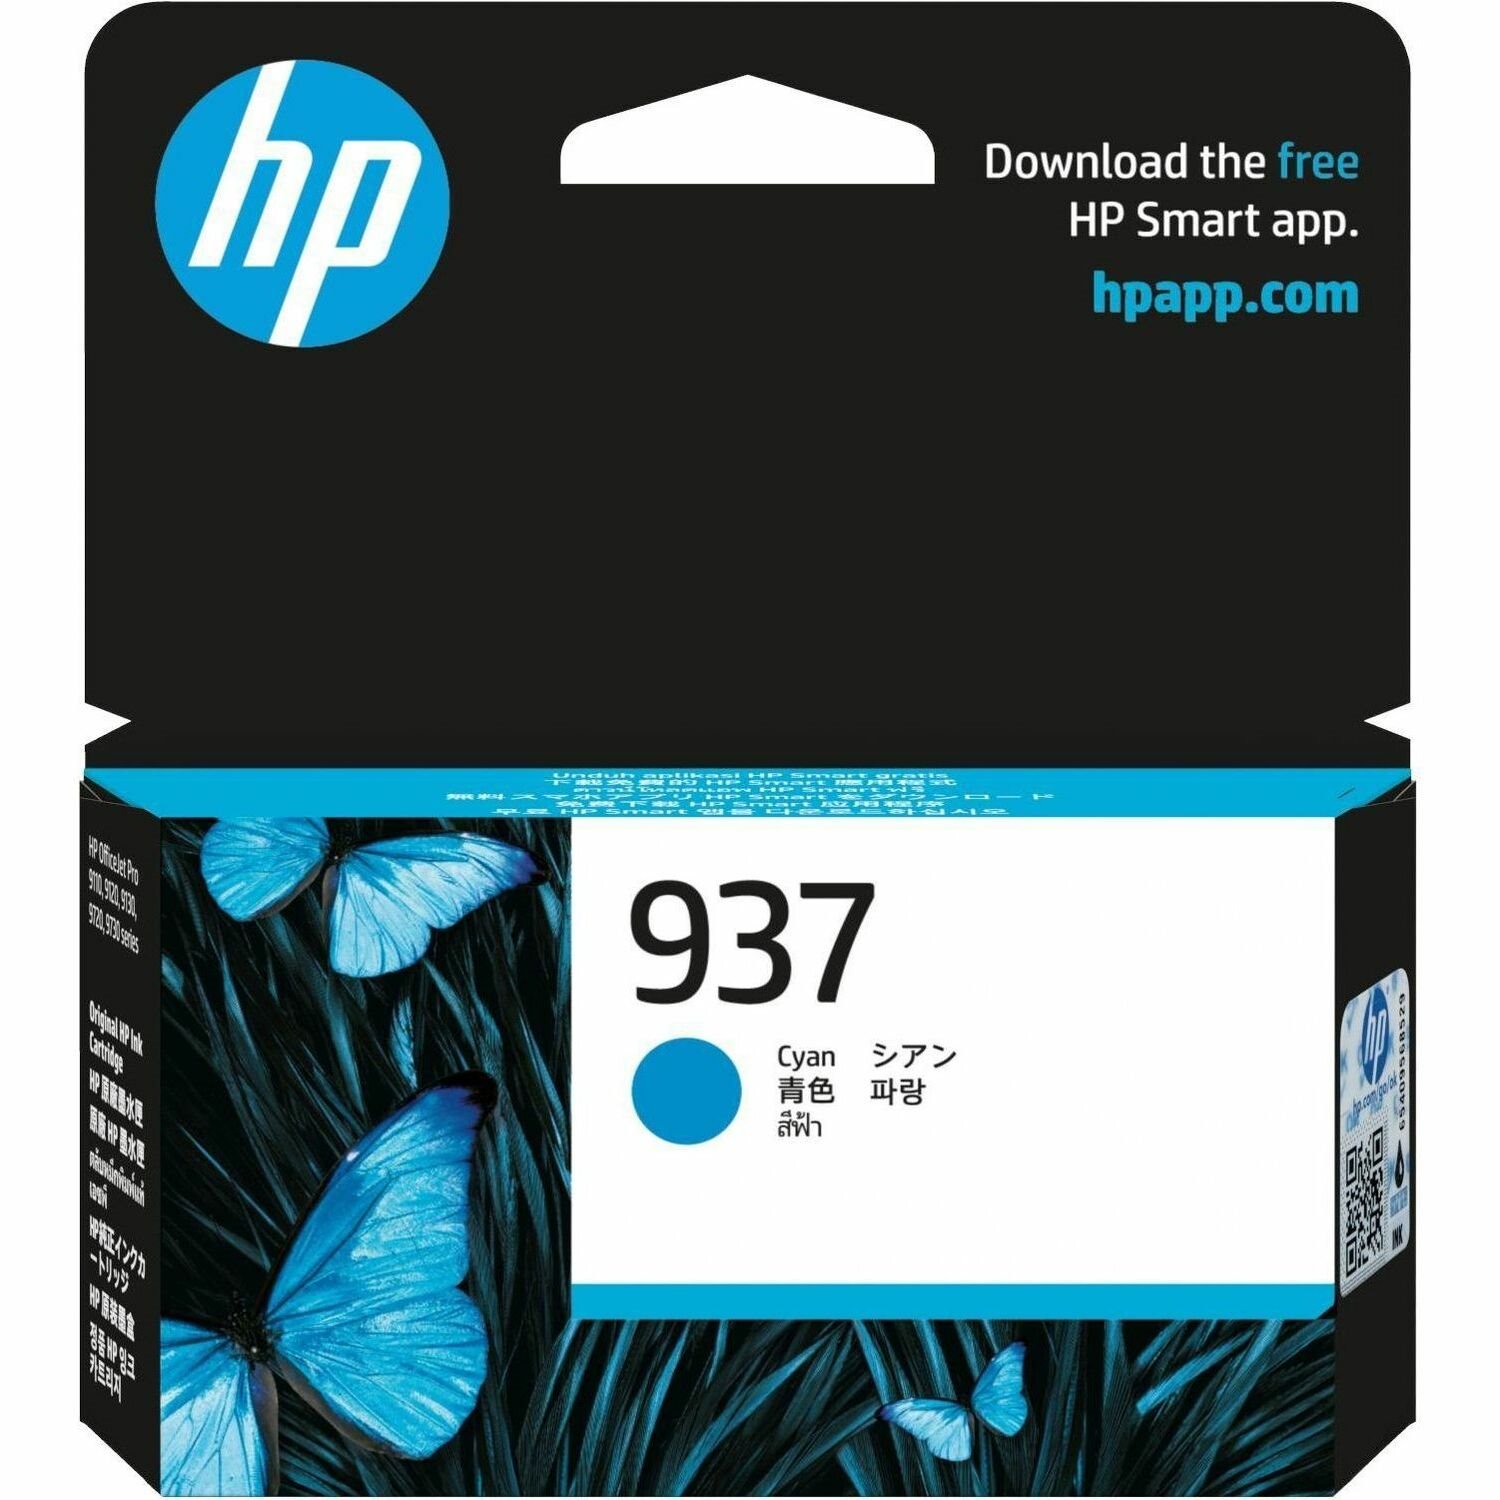 HP 937 Original Standard Yield Inkjet Ink Cartridge - Cyan - 1 Pack